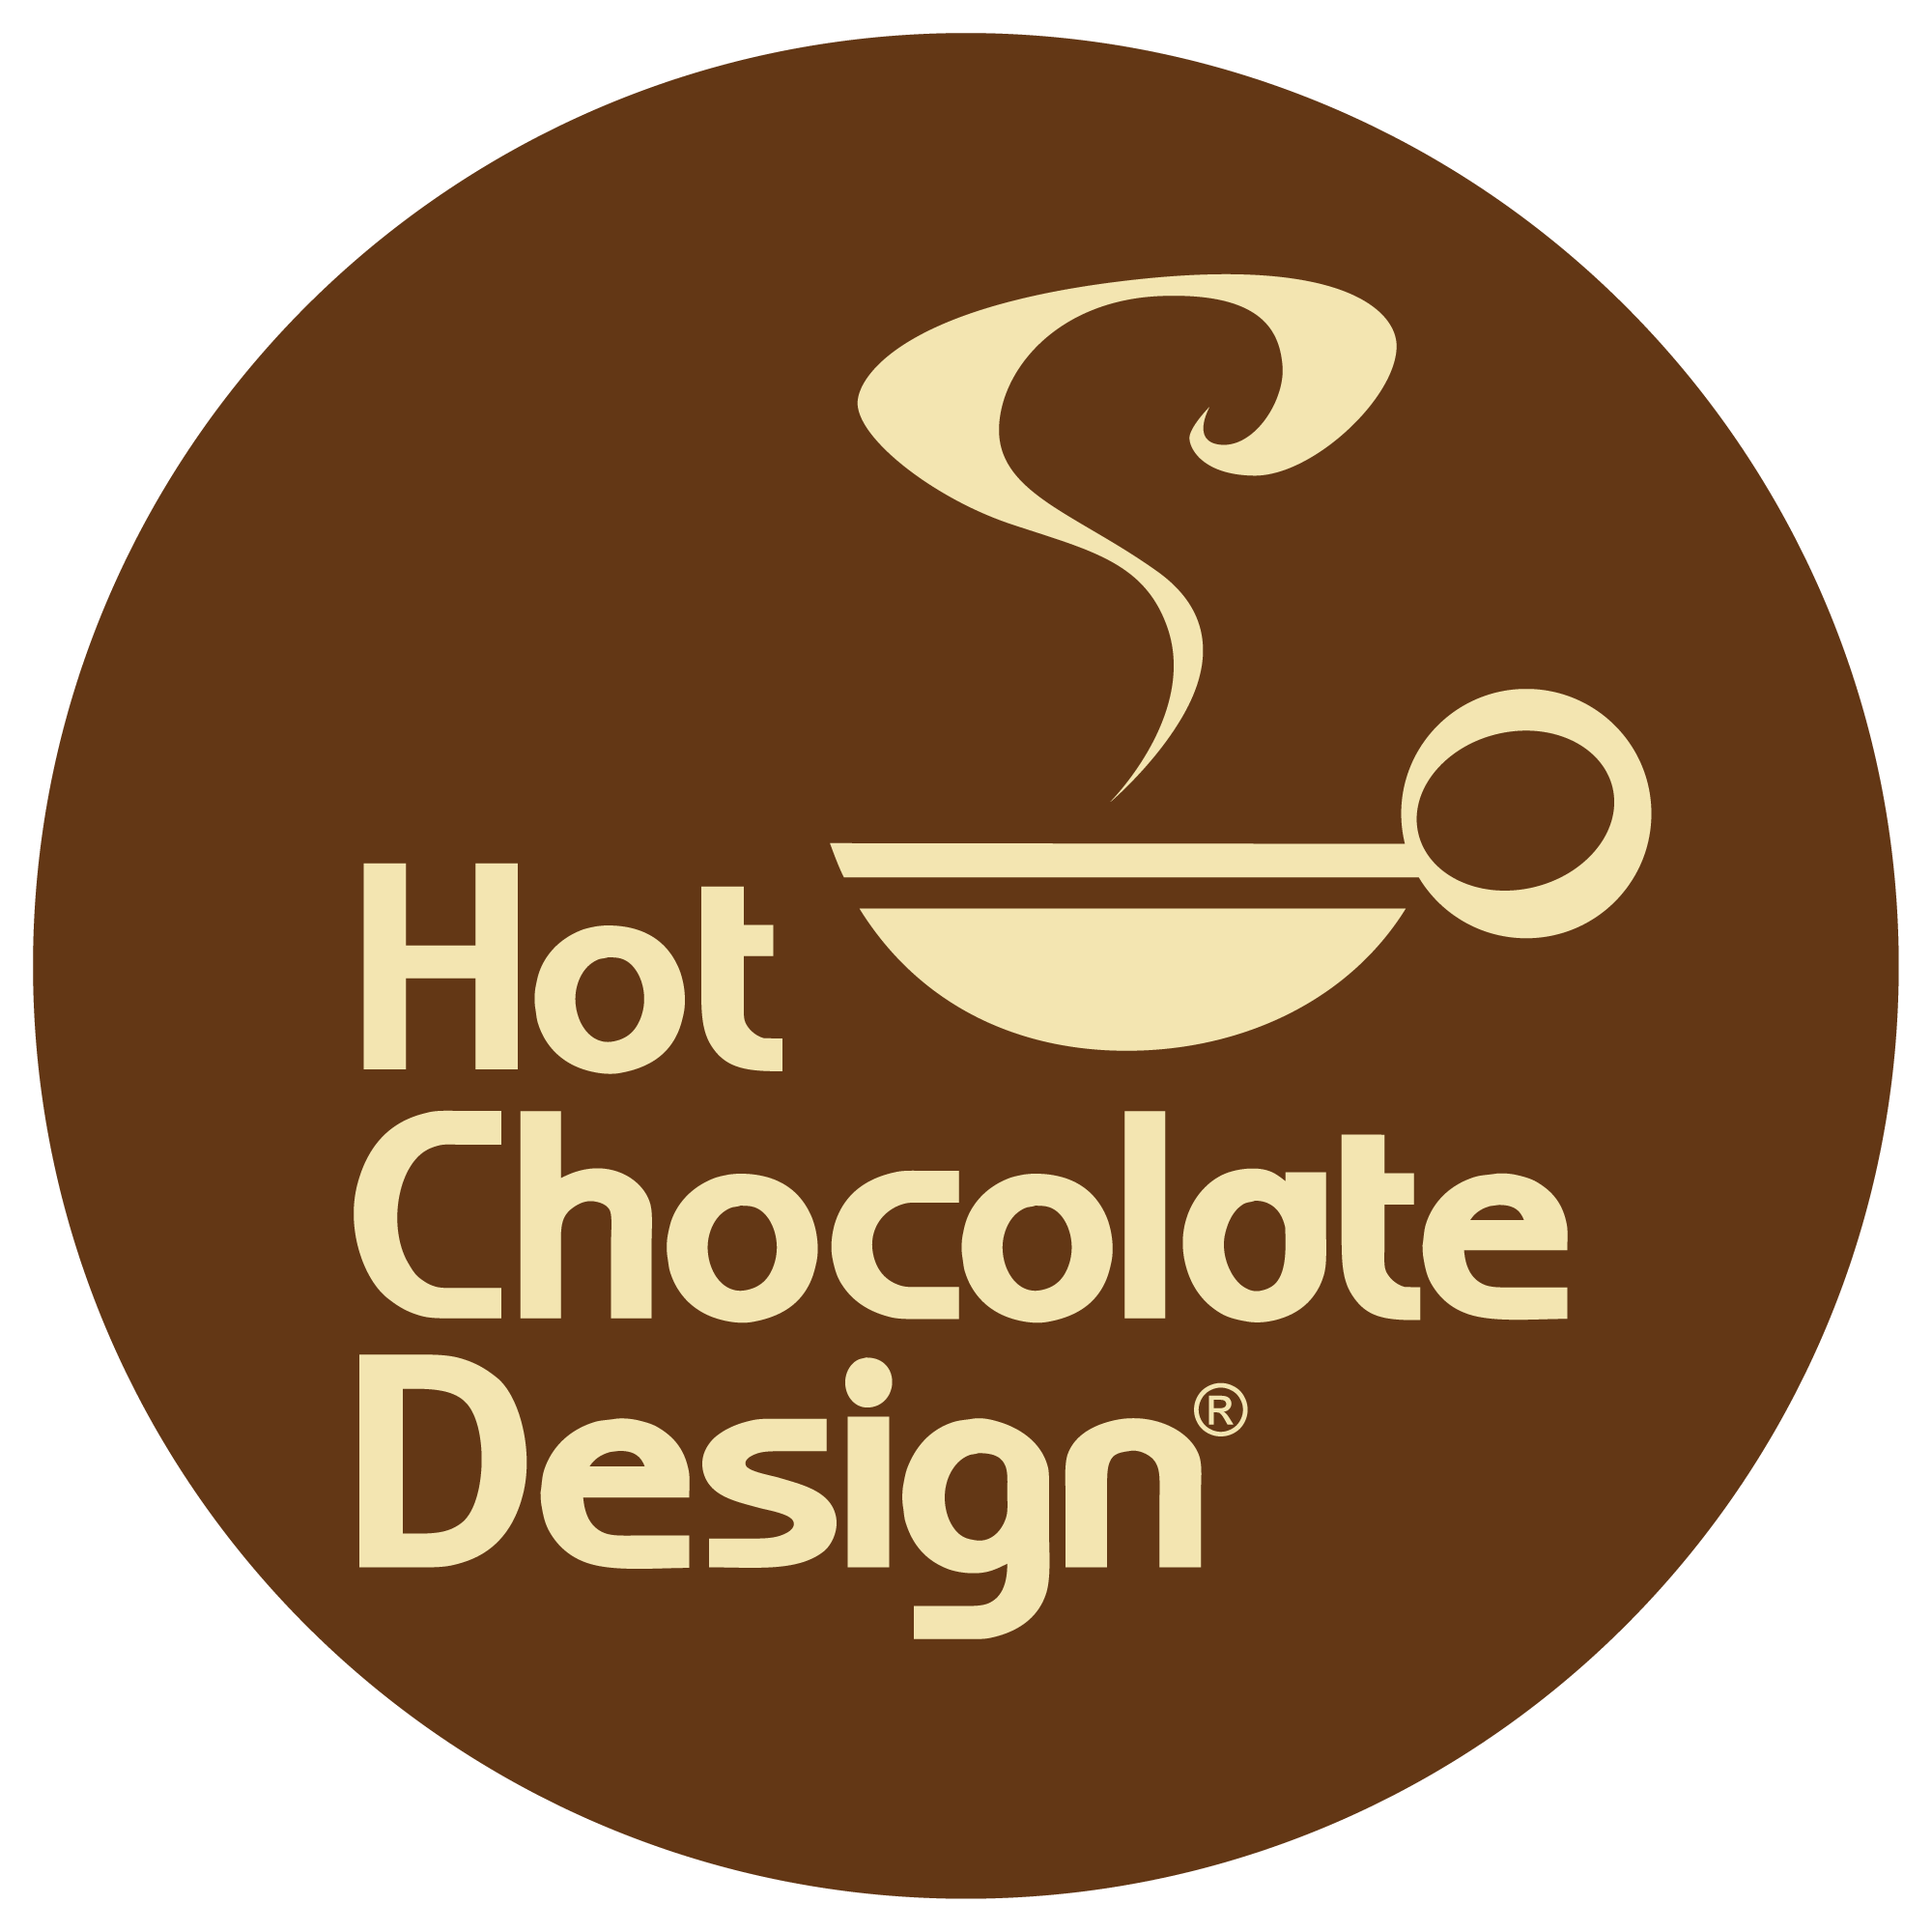 Hot Chocolate Design logo